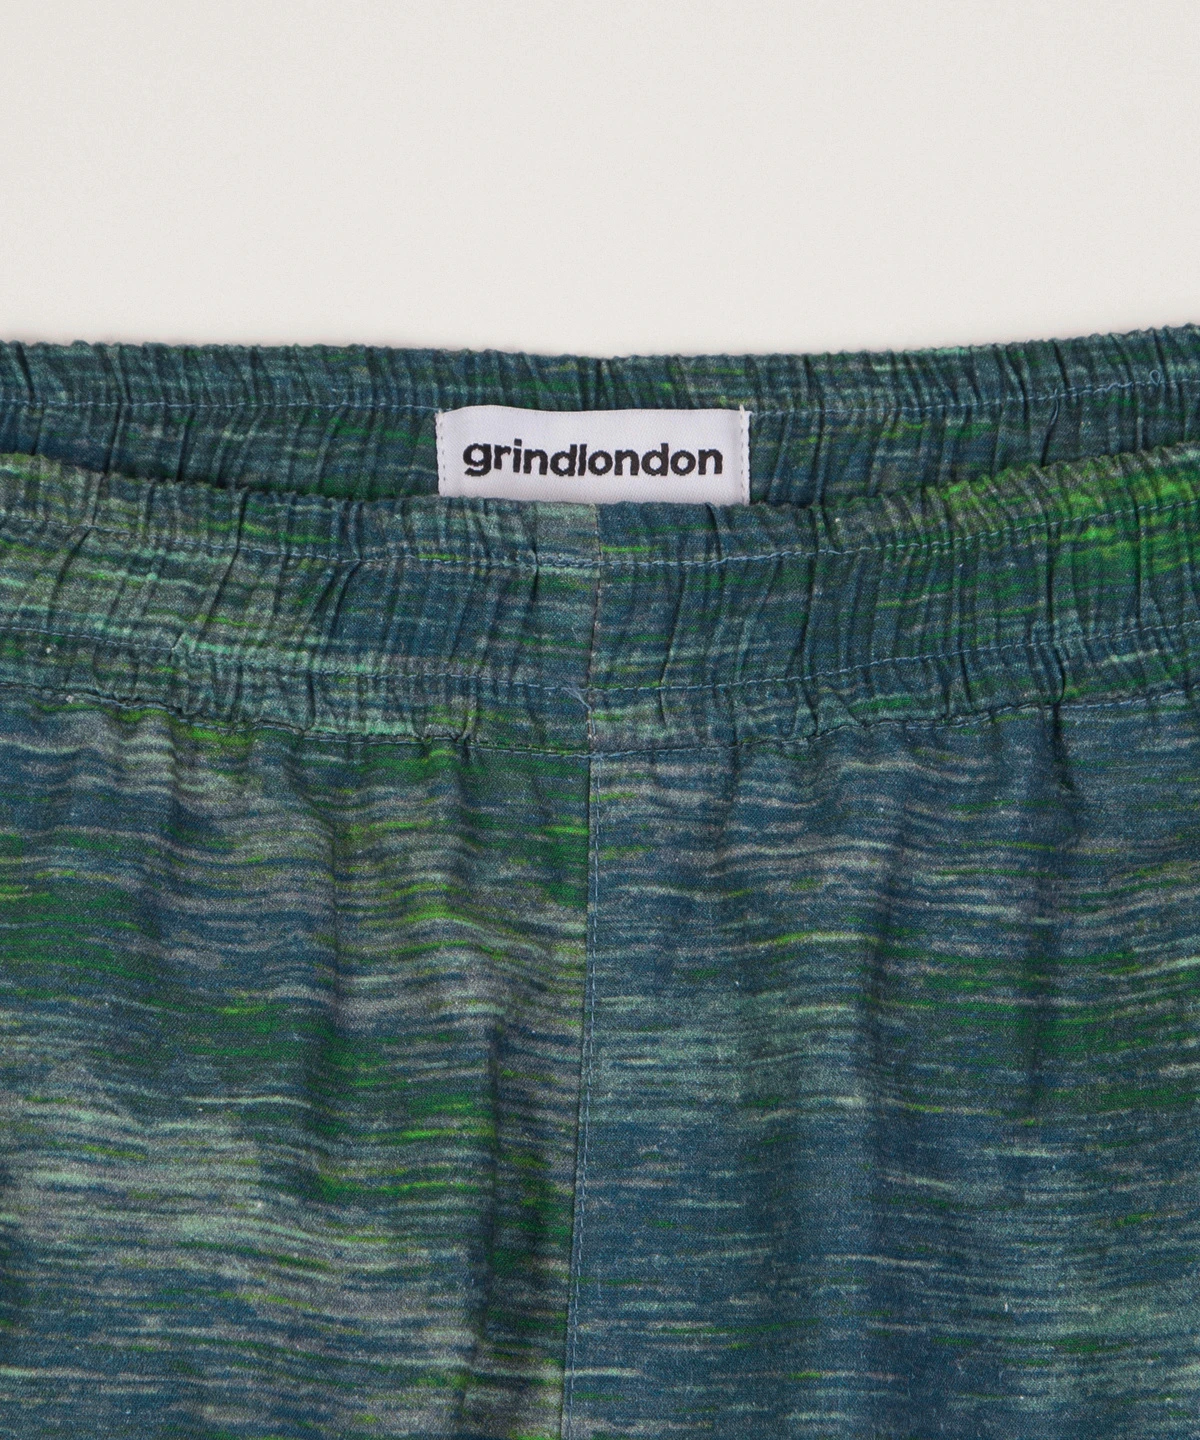 grindlondon 100% cotton relaxed trouser fibre optics